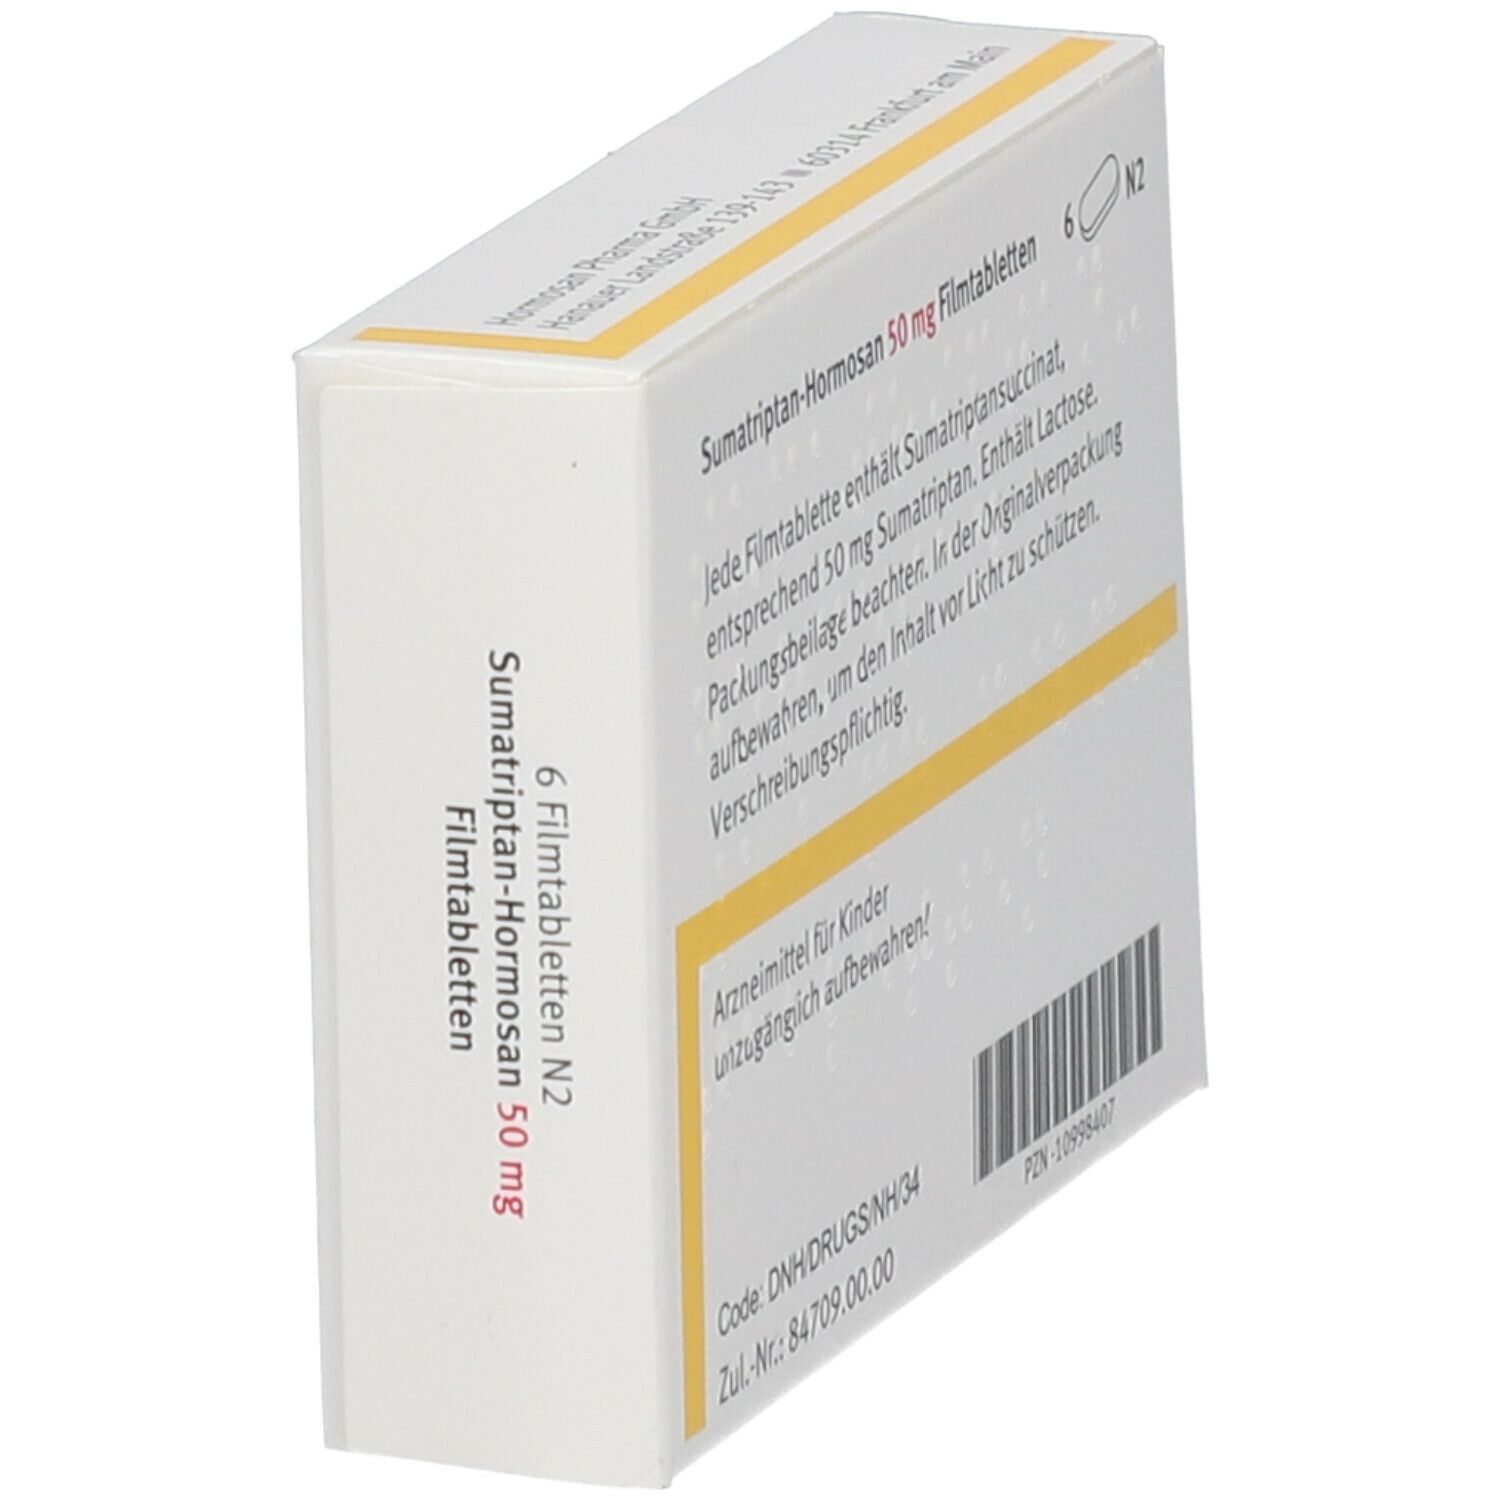 Sumatriptan-Hormosan 50 mg